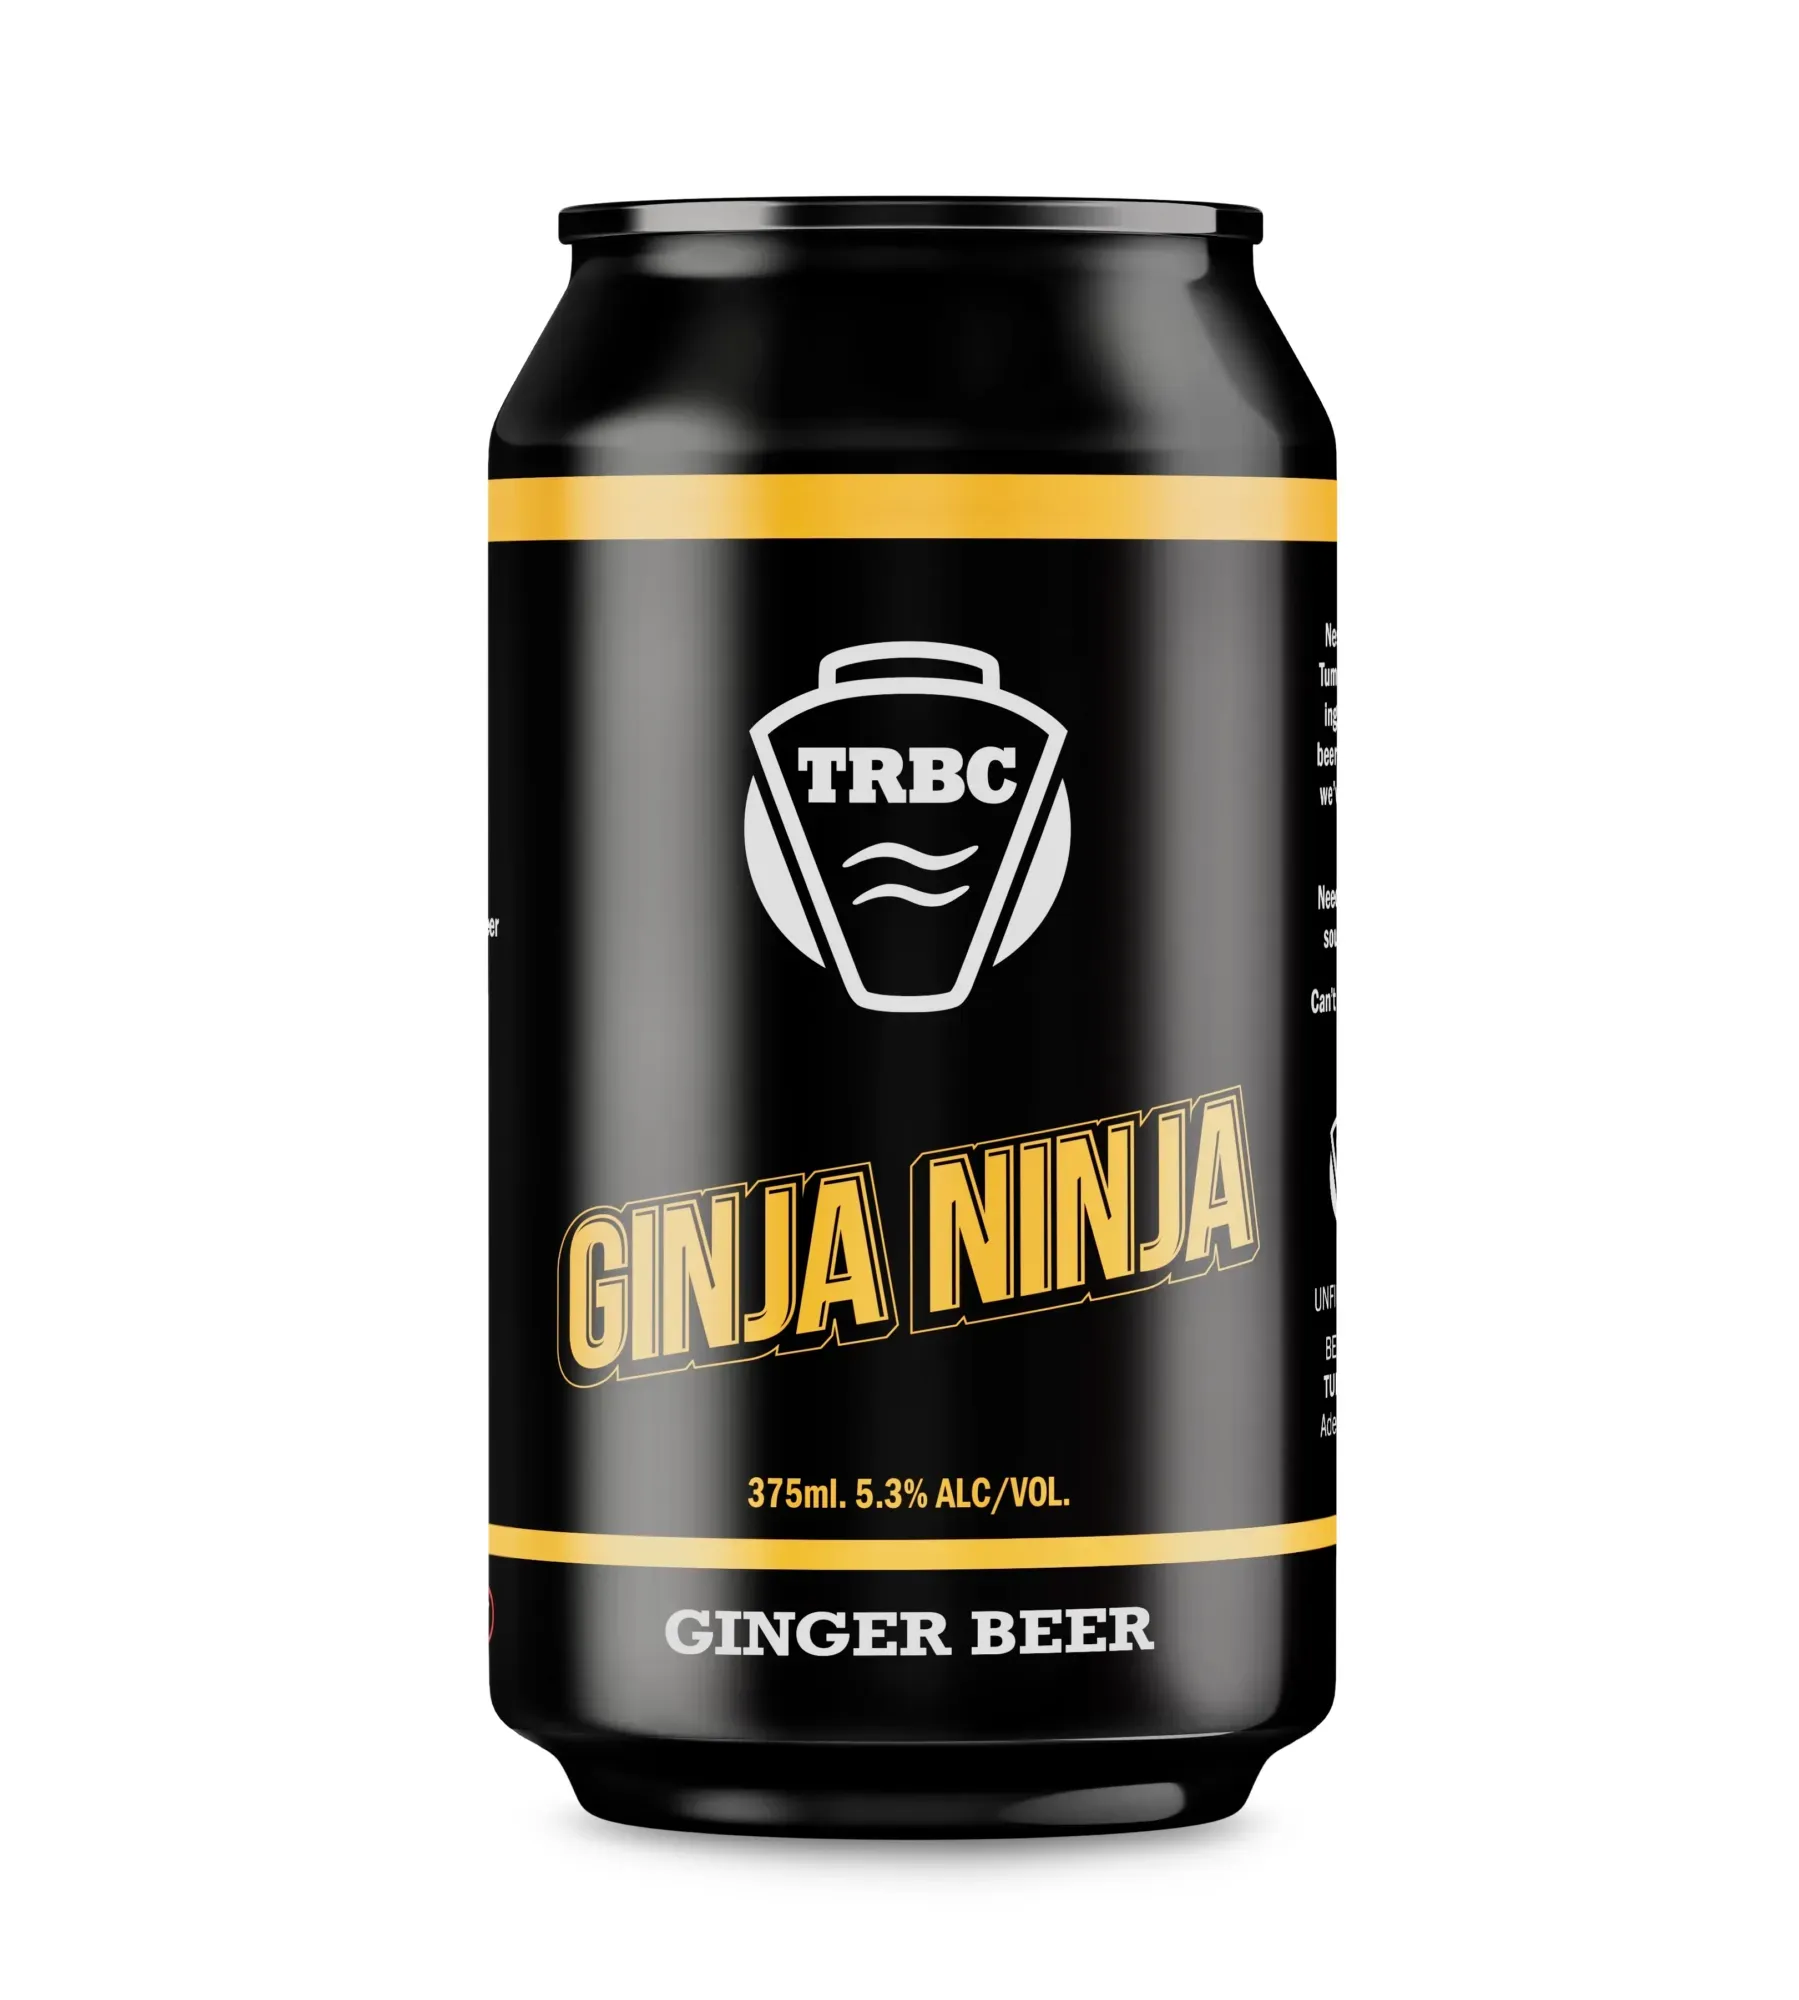 Image - Ginga Ninja by Tumut River Brewing Co.